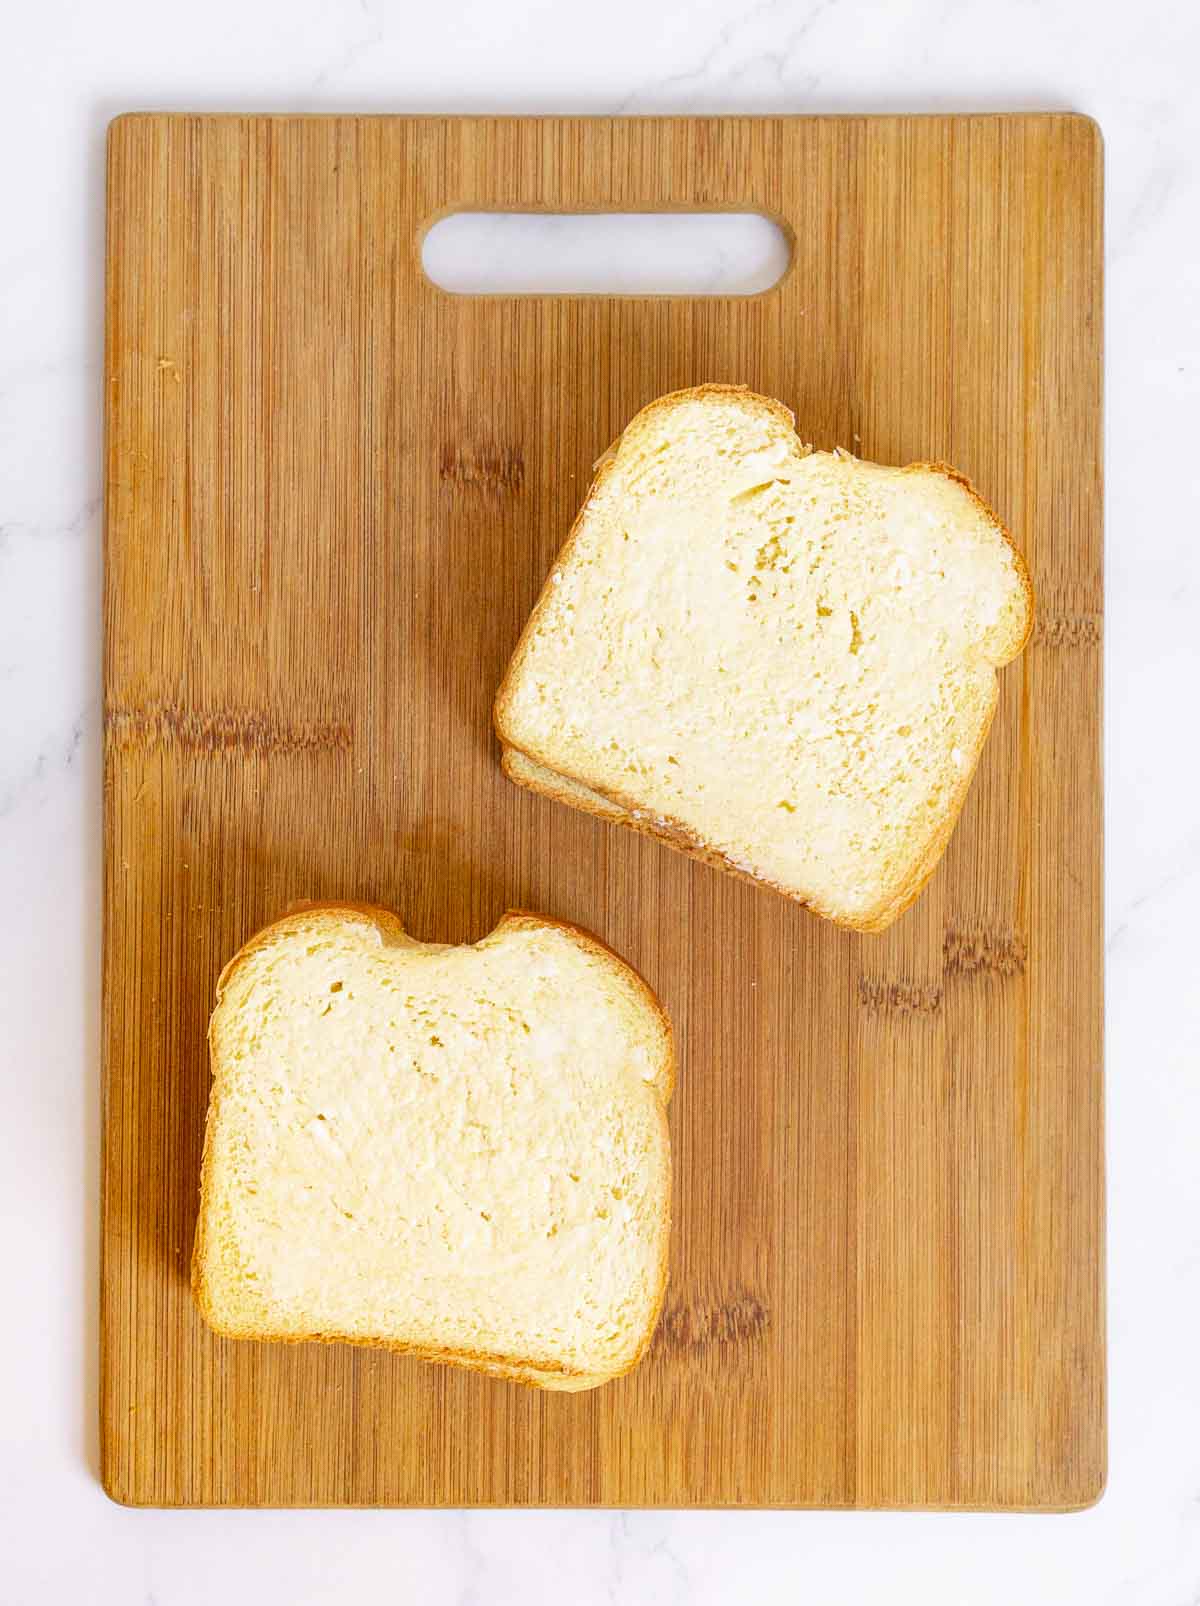 Butter spread on sliced bread